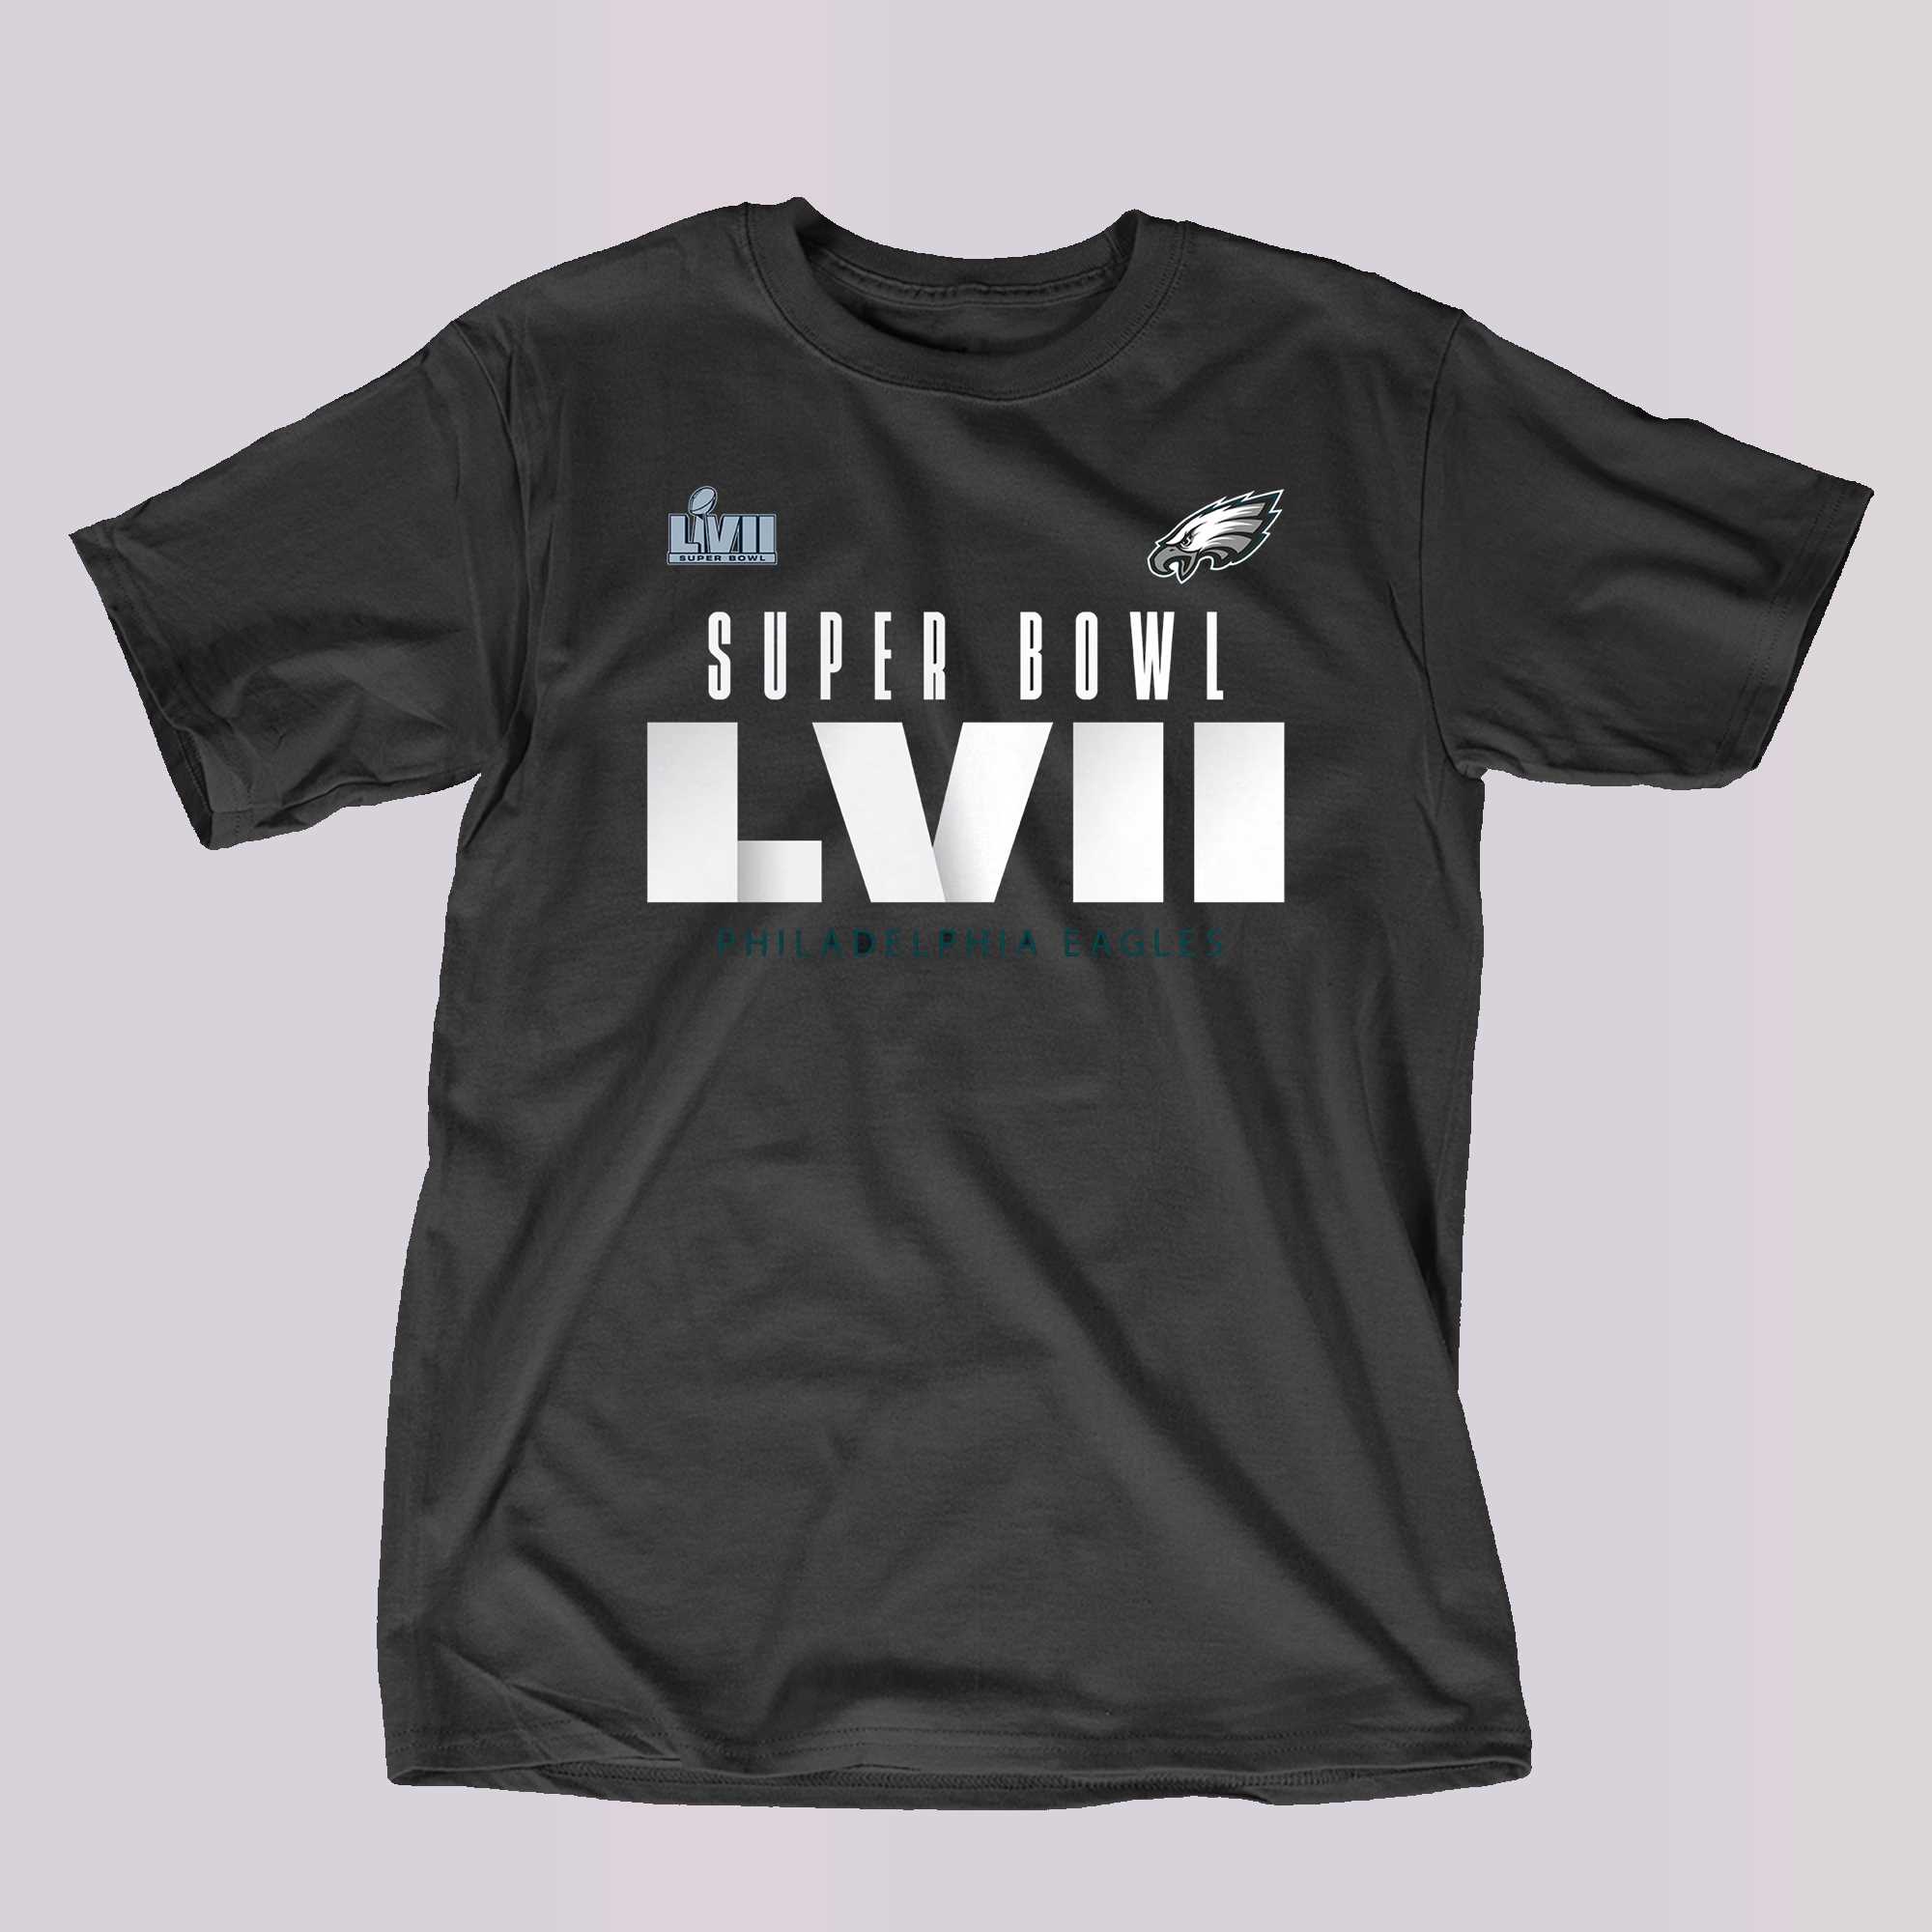 Eagles Super Bowl Lvii Shirt